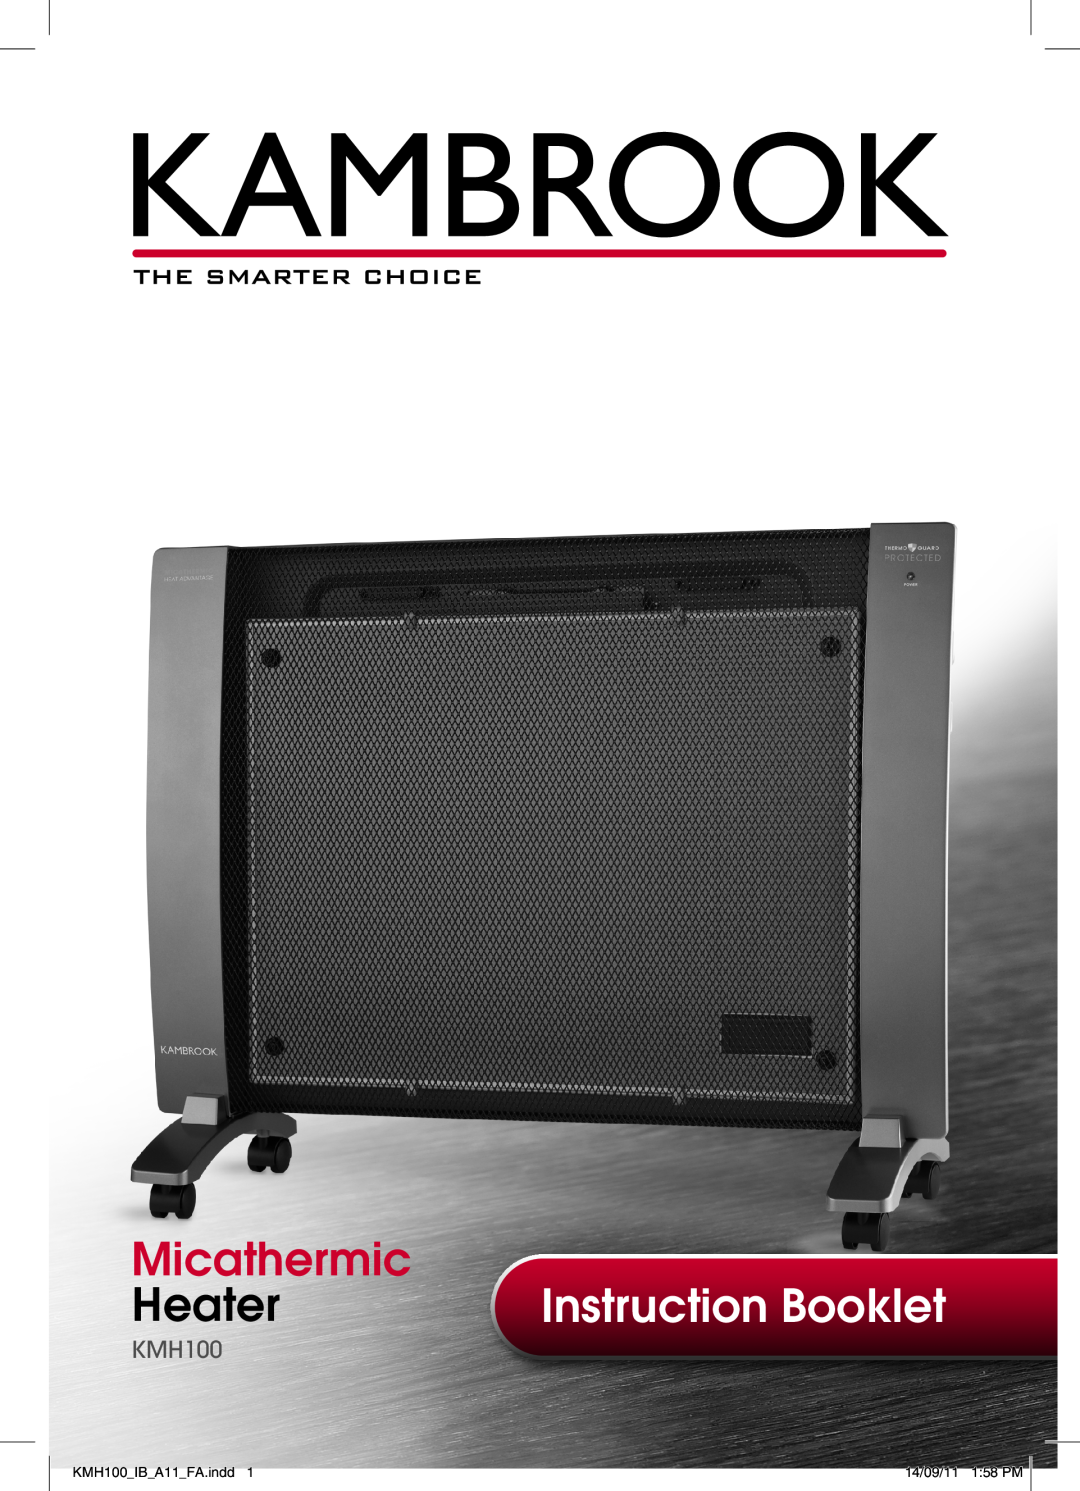 Kambrook manual Micathermic, Heater, Instruction Booklet, KMH100 IB A11 FA.indd, 14/09/11 1 58 PM 